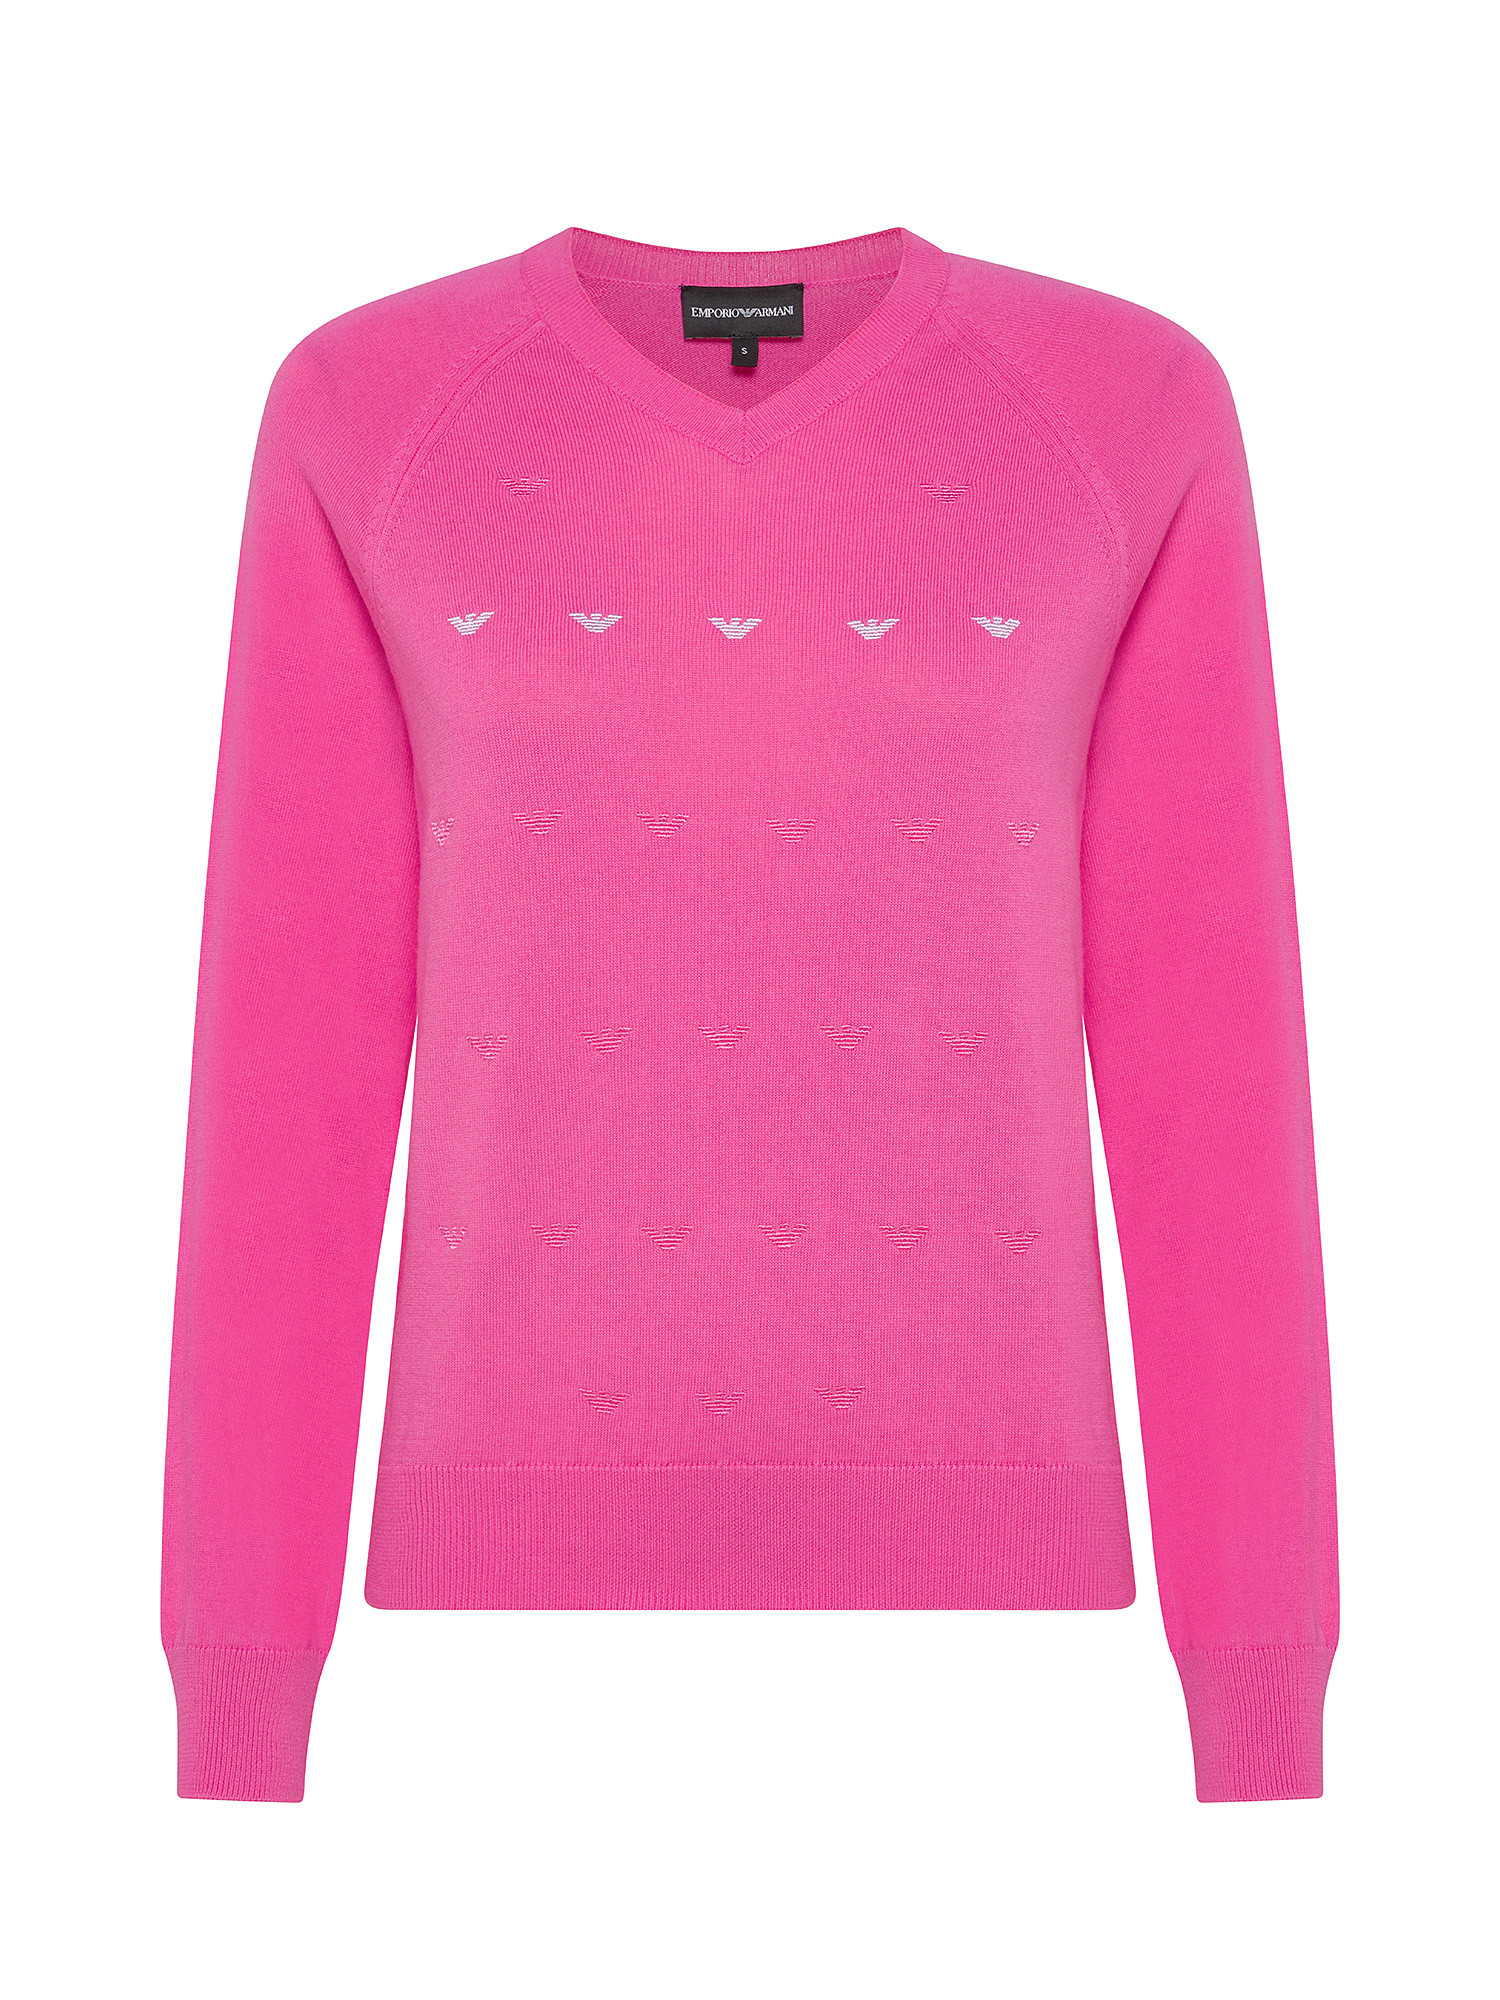 Emporio Armani - Cotton sweater with eagle logo, Pink Fuchsia, large image number 0